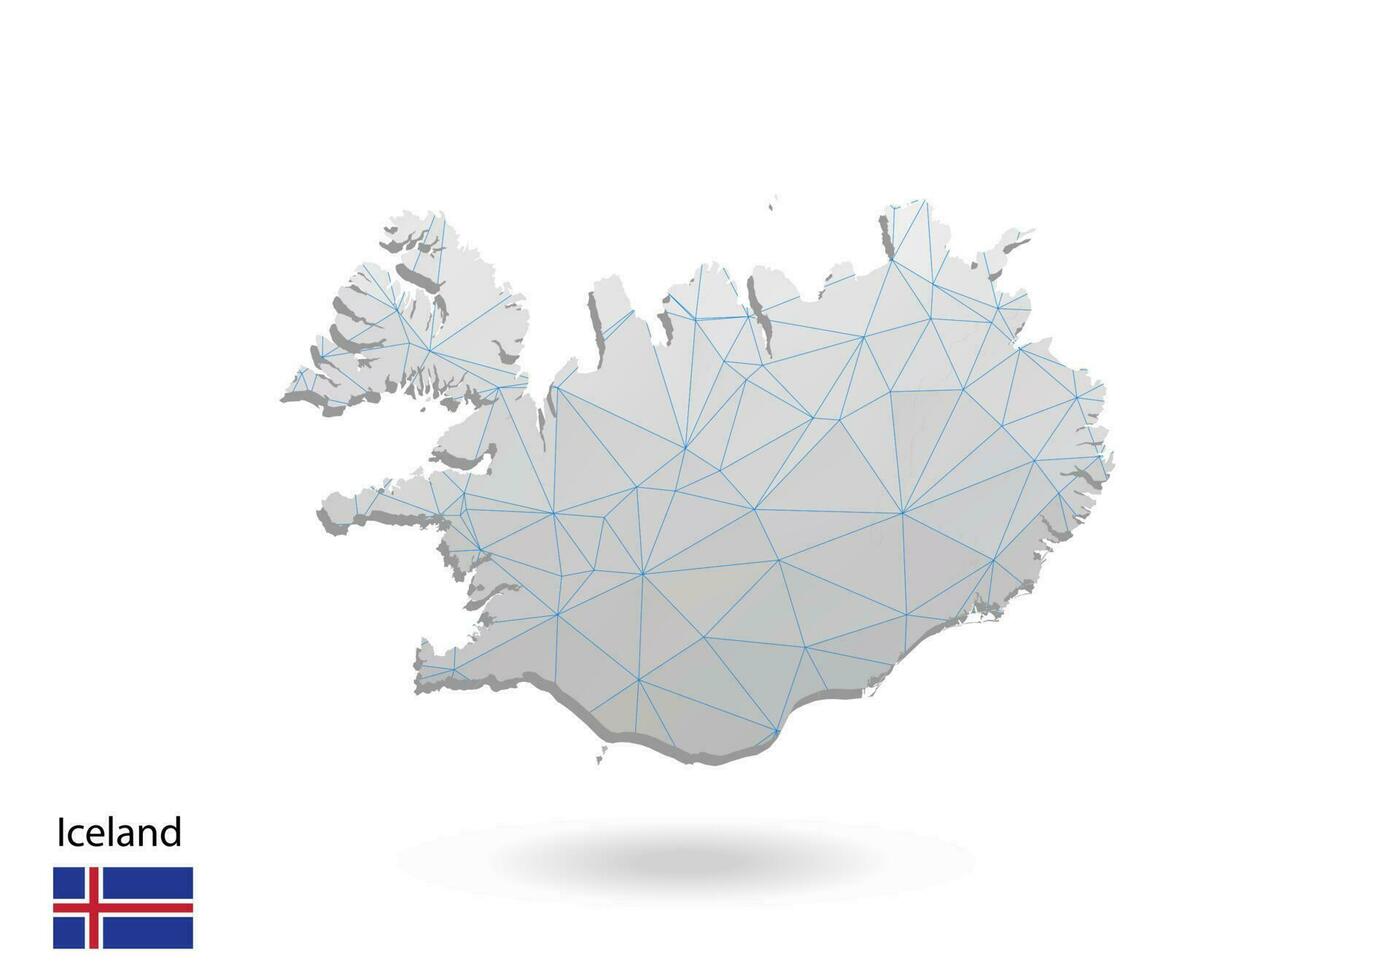 mapa vectorial de islandia con diseño de triángulos de moda en estilo poligonal sobre fondo oscuro, forma de mapa en estilo moderno de arte de corte de papel 3d. diseño de corte de papel en capas. vector